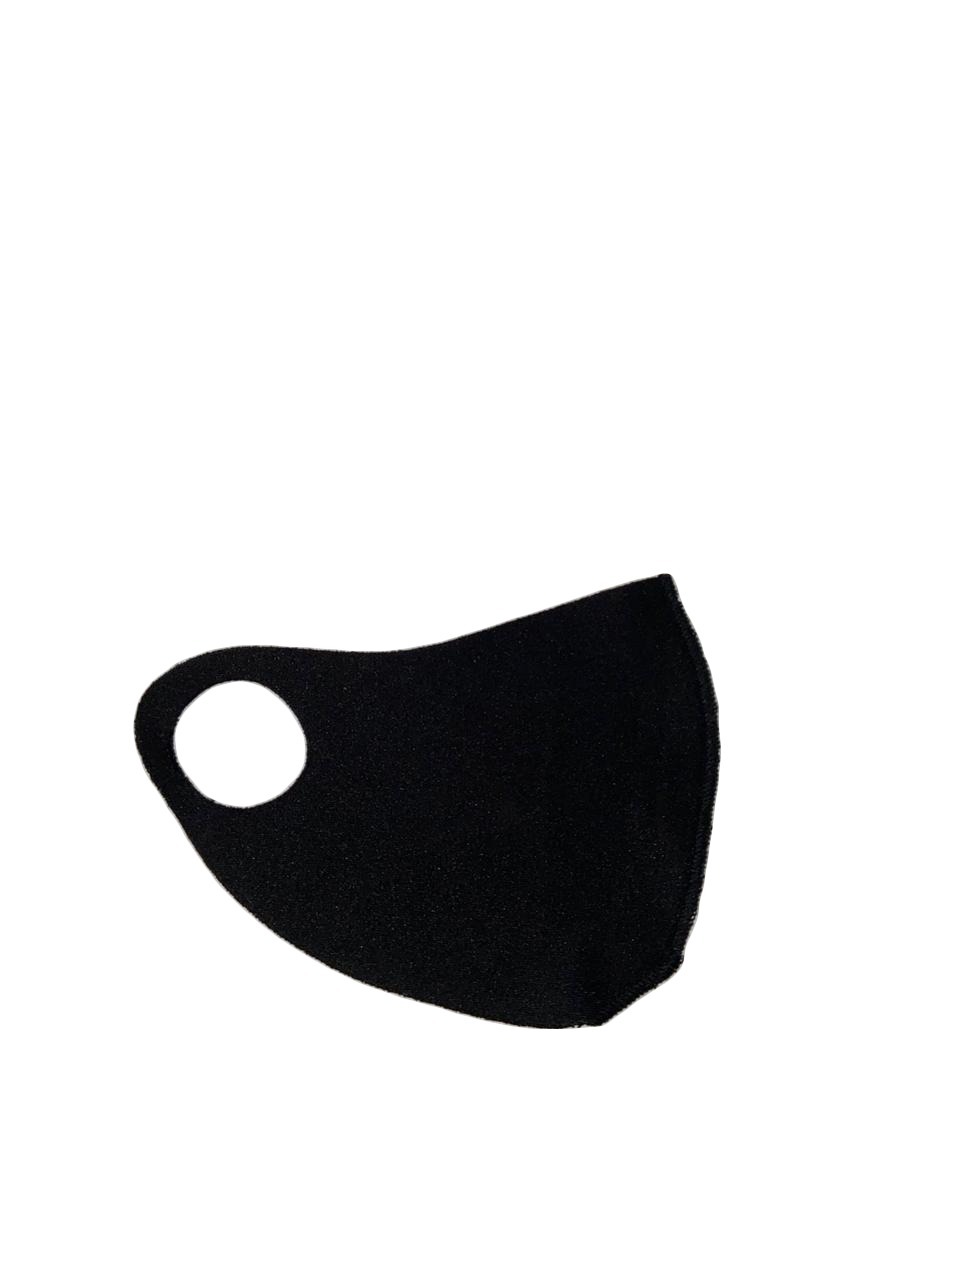 Маска неопреновая многоразовая Texture Mask 1 мм черная 1 шт.